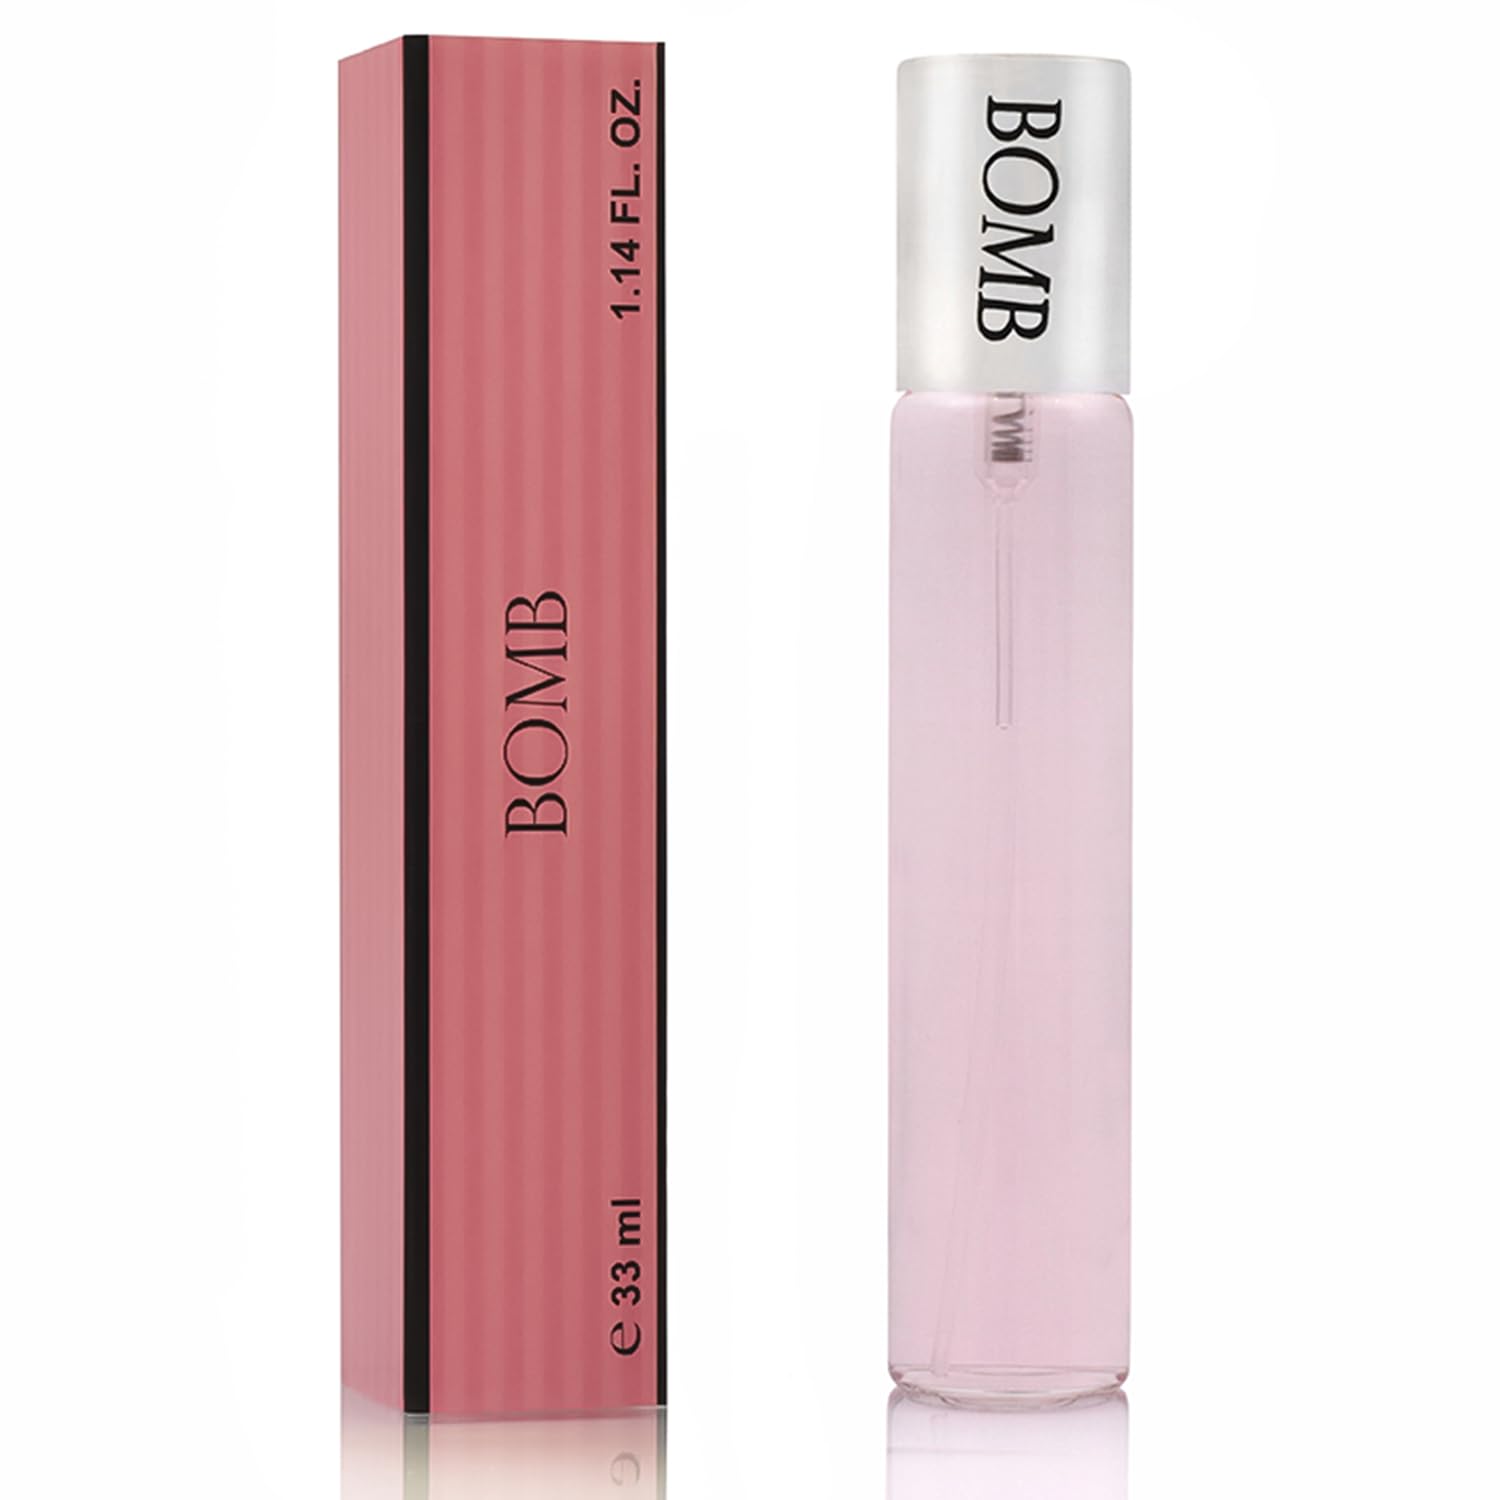 Perfume Women\'s Fragrance Spray - The Inspired Pendant as Eau de Parfum for Driver and Car - 33 ml Bottle for Handbag & On the Go (BOMB)